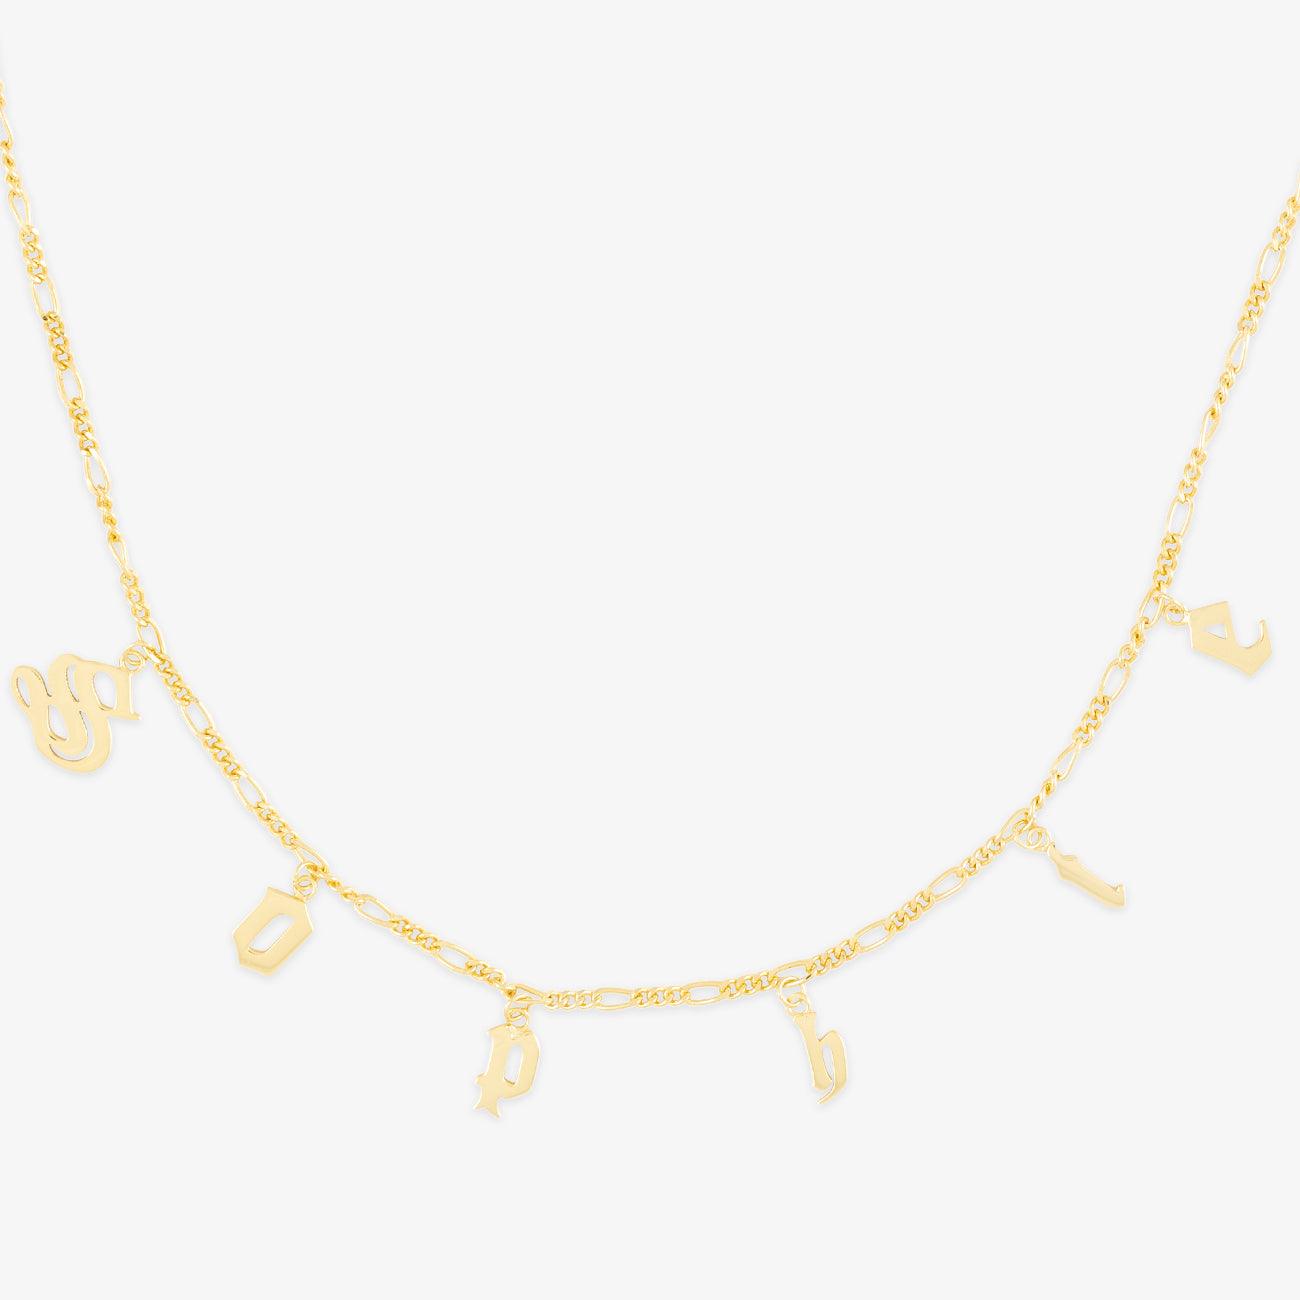 herzschmuck Gothic Initial Figaro Chain Necklace